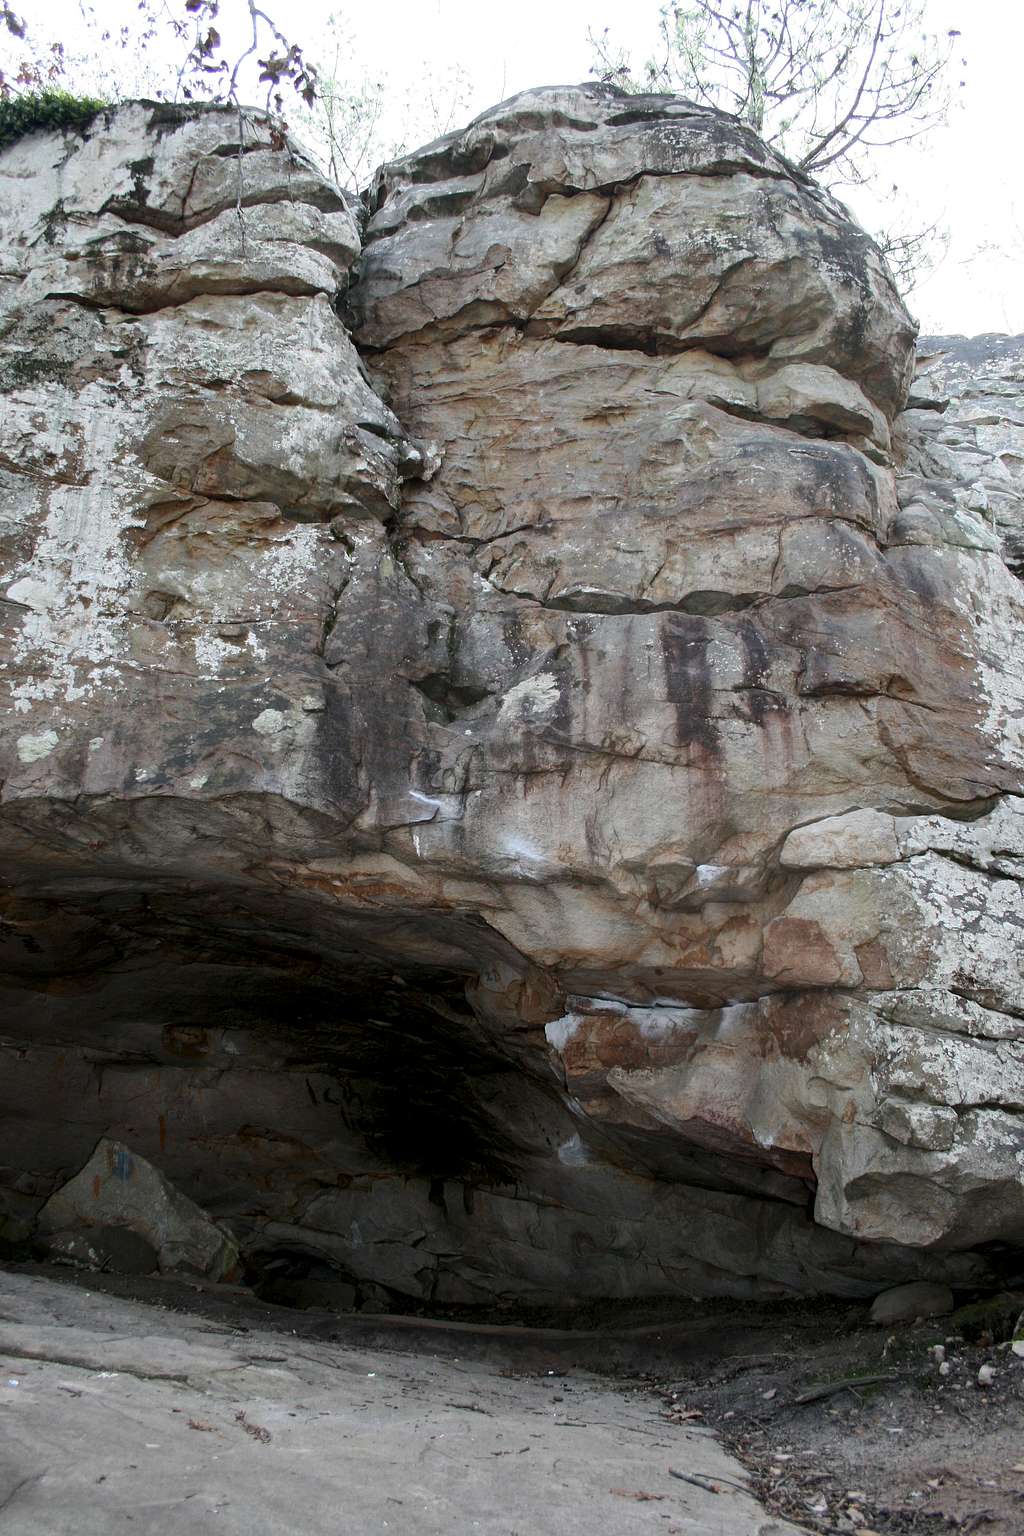 The Ledge Cave